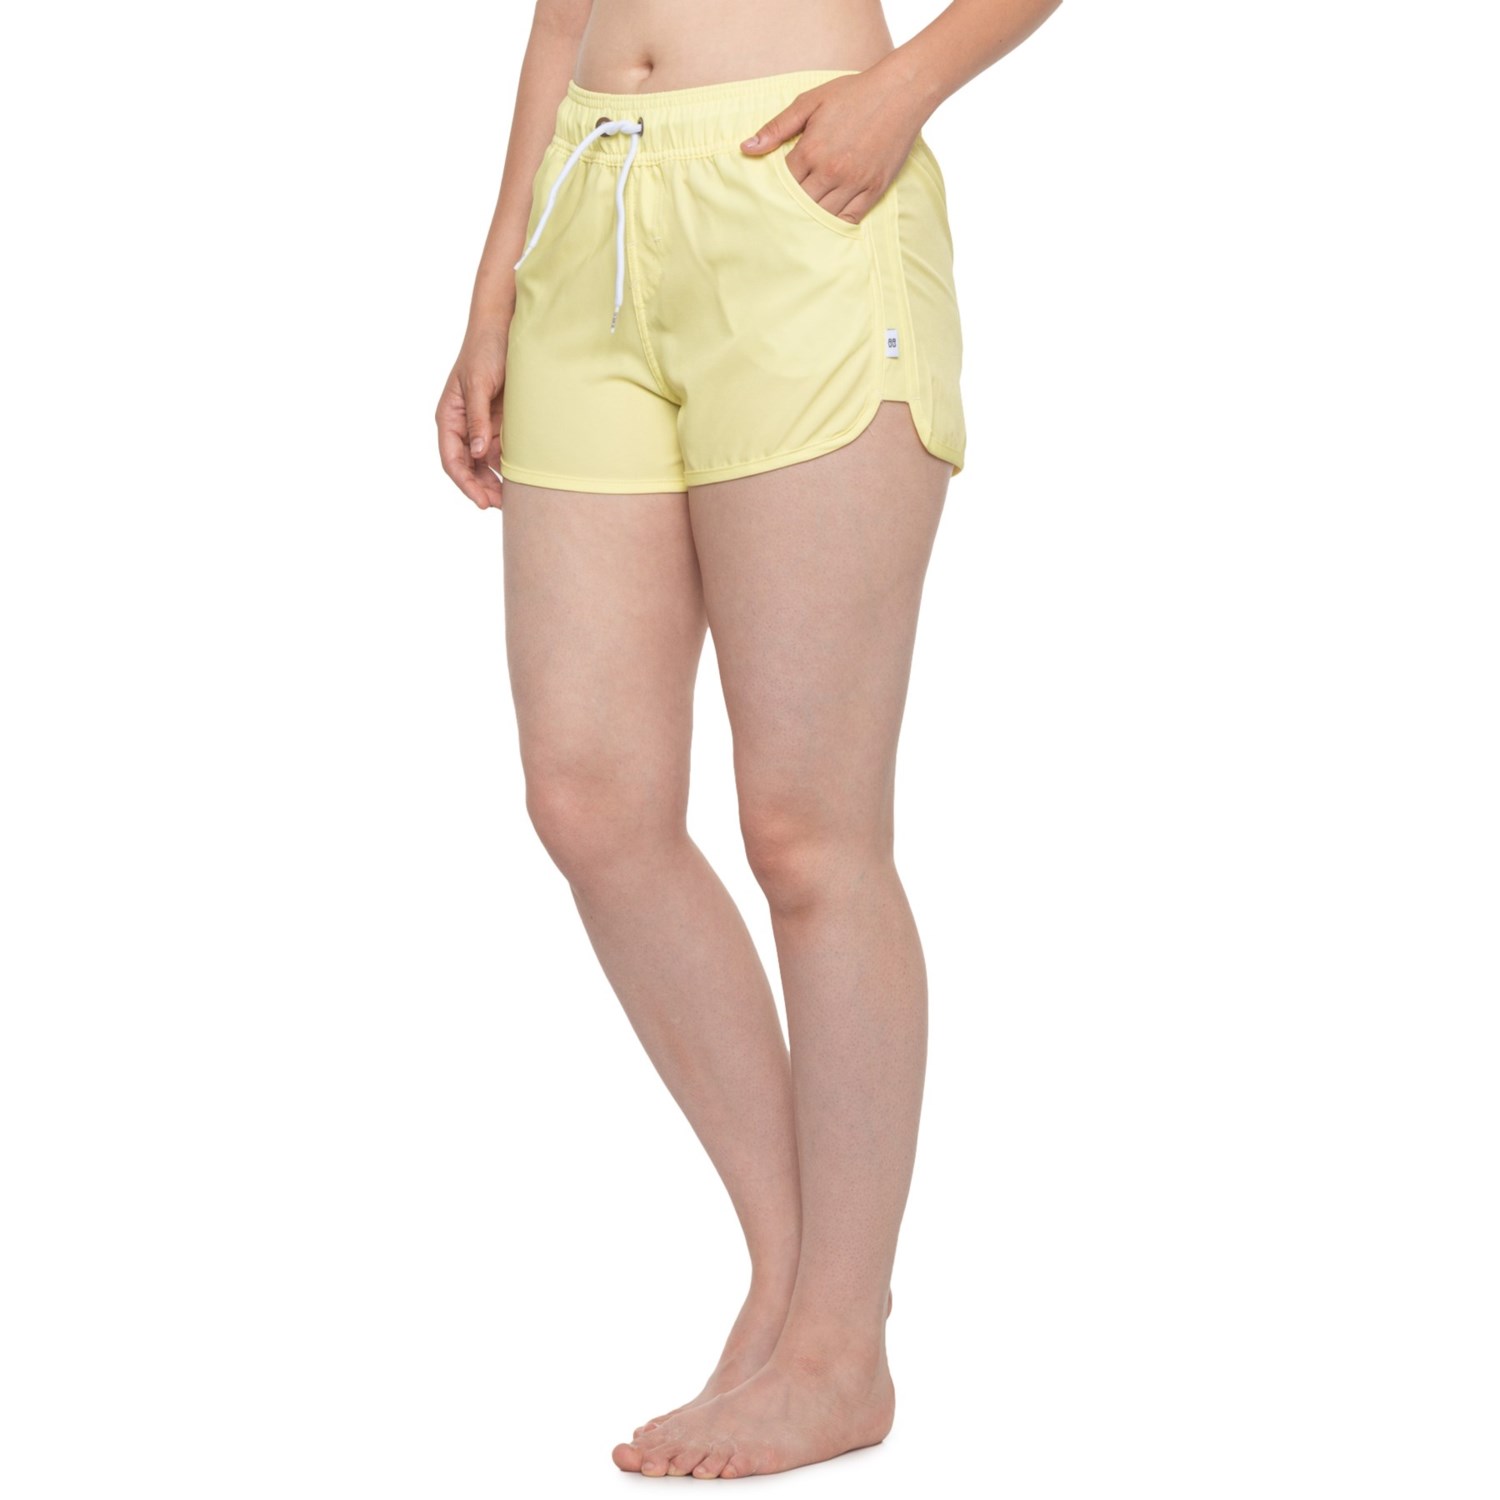 BONDI BEAMERS Solid Swim Shorts (For Women) - Save 39%